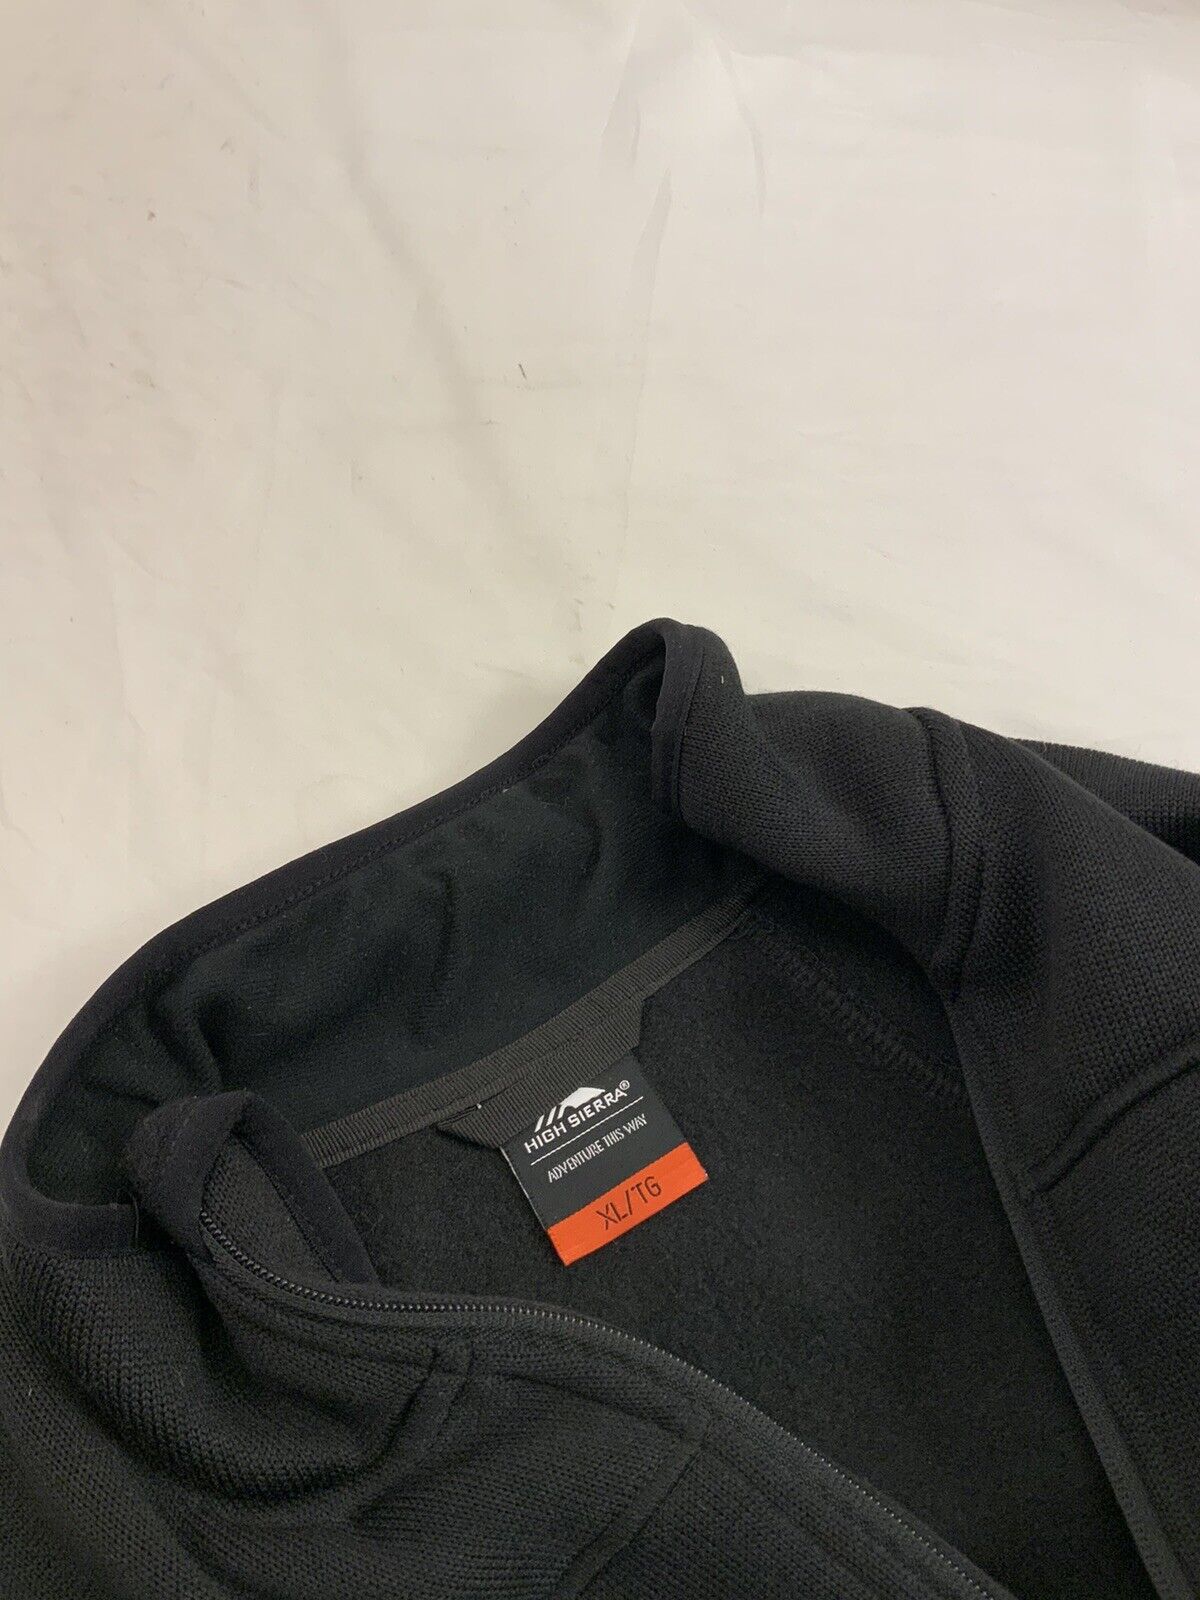 Top Gun High Sierra Fleece Pullover XL Black Poly ¼ Zip LNWOT YGI T1-131